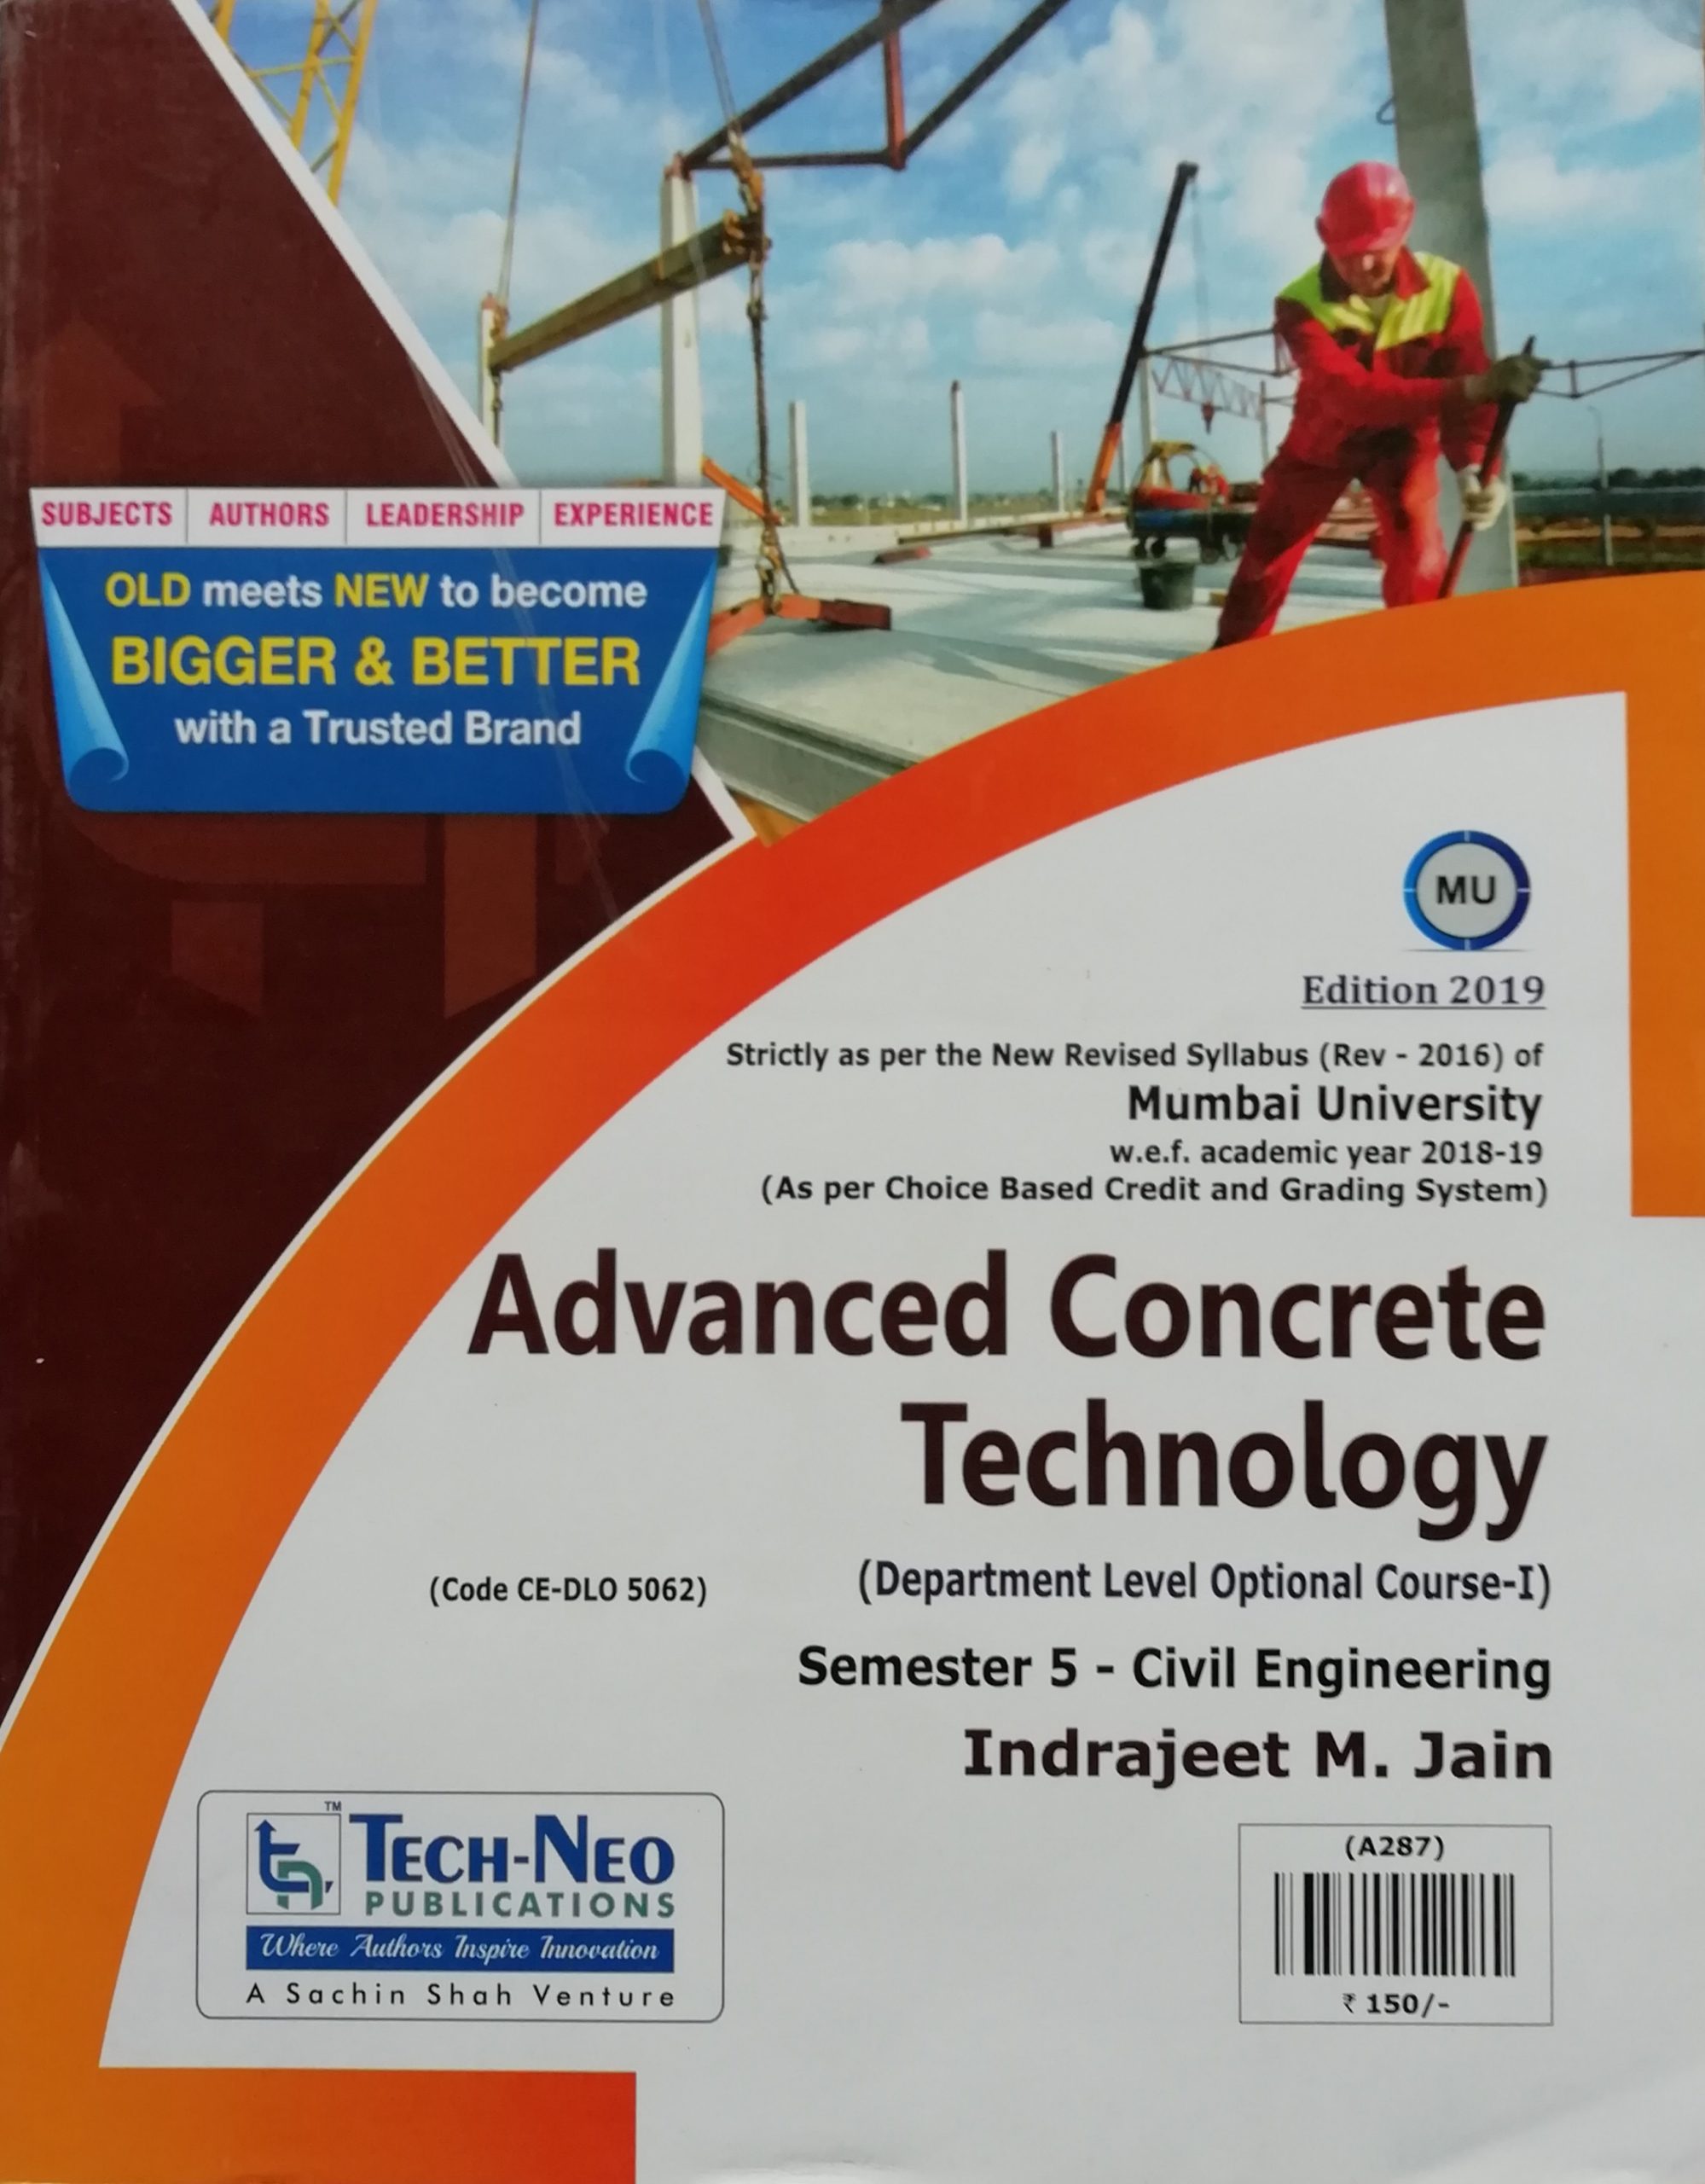 Tech-Neo – Advanced Concrete Technology, by Inderajeet M. Jain